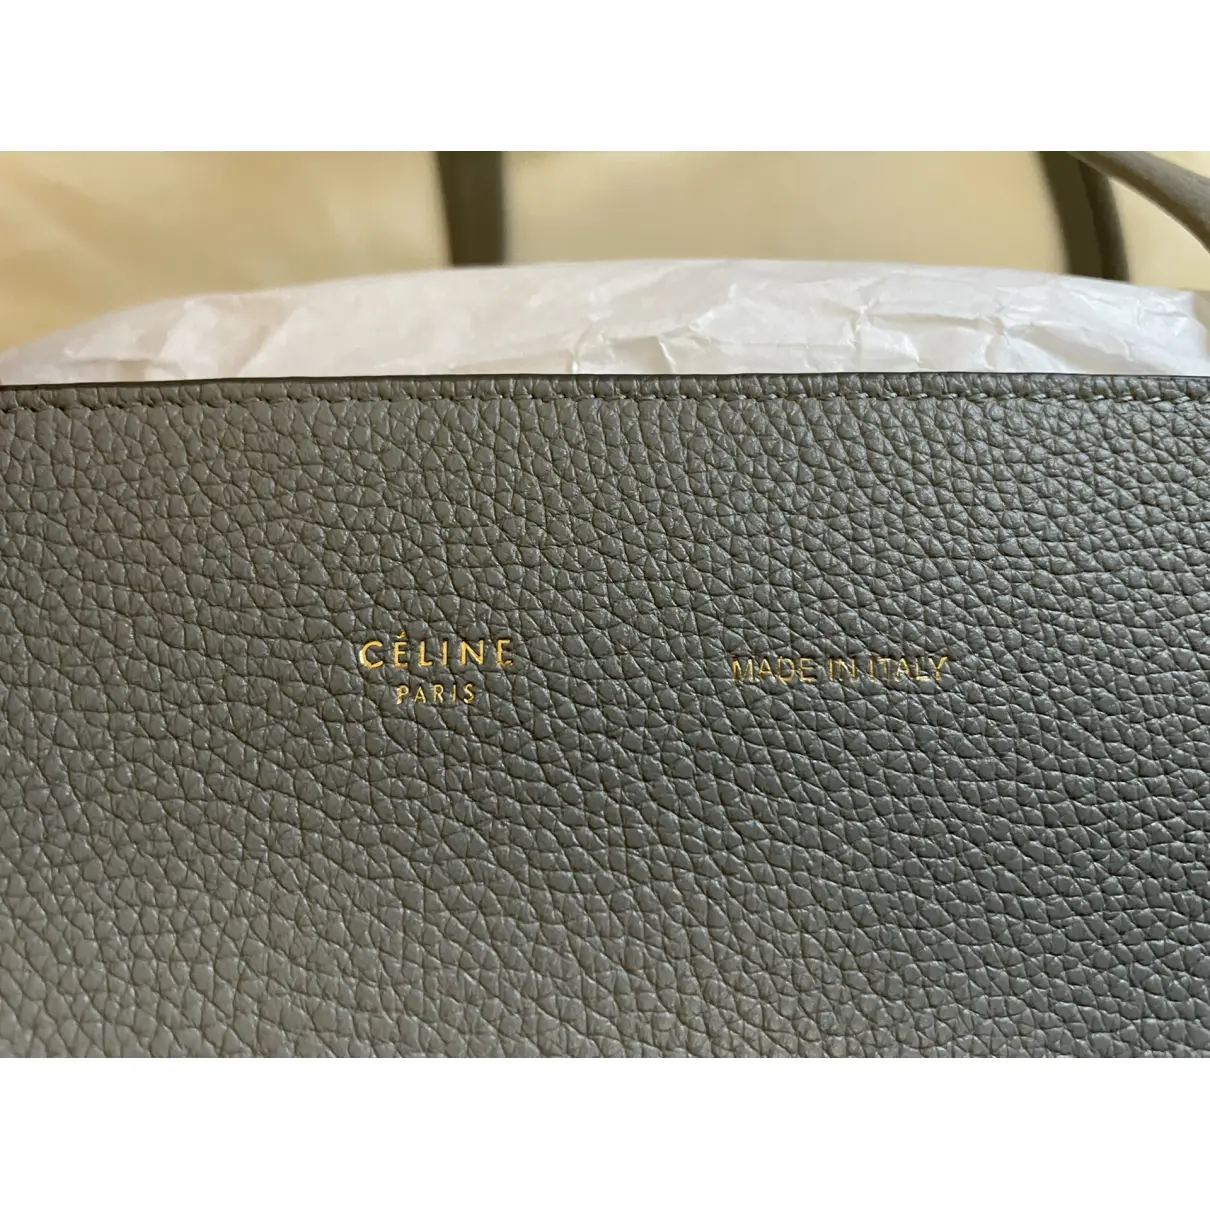 Buy Celine Phantom leather tote online